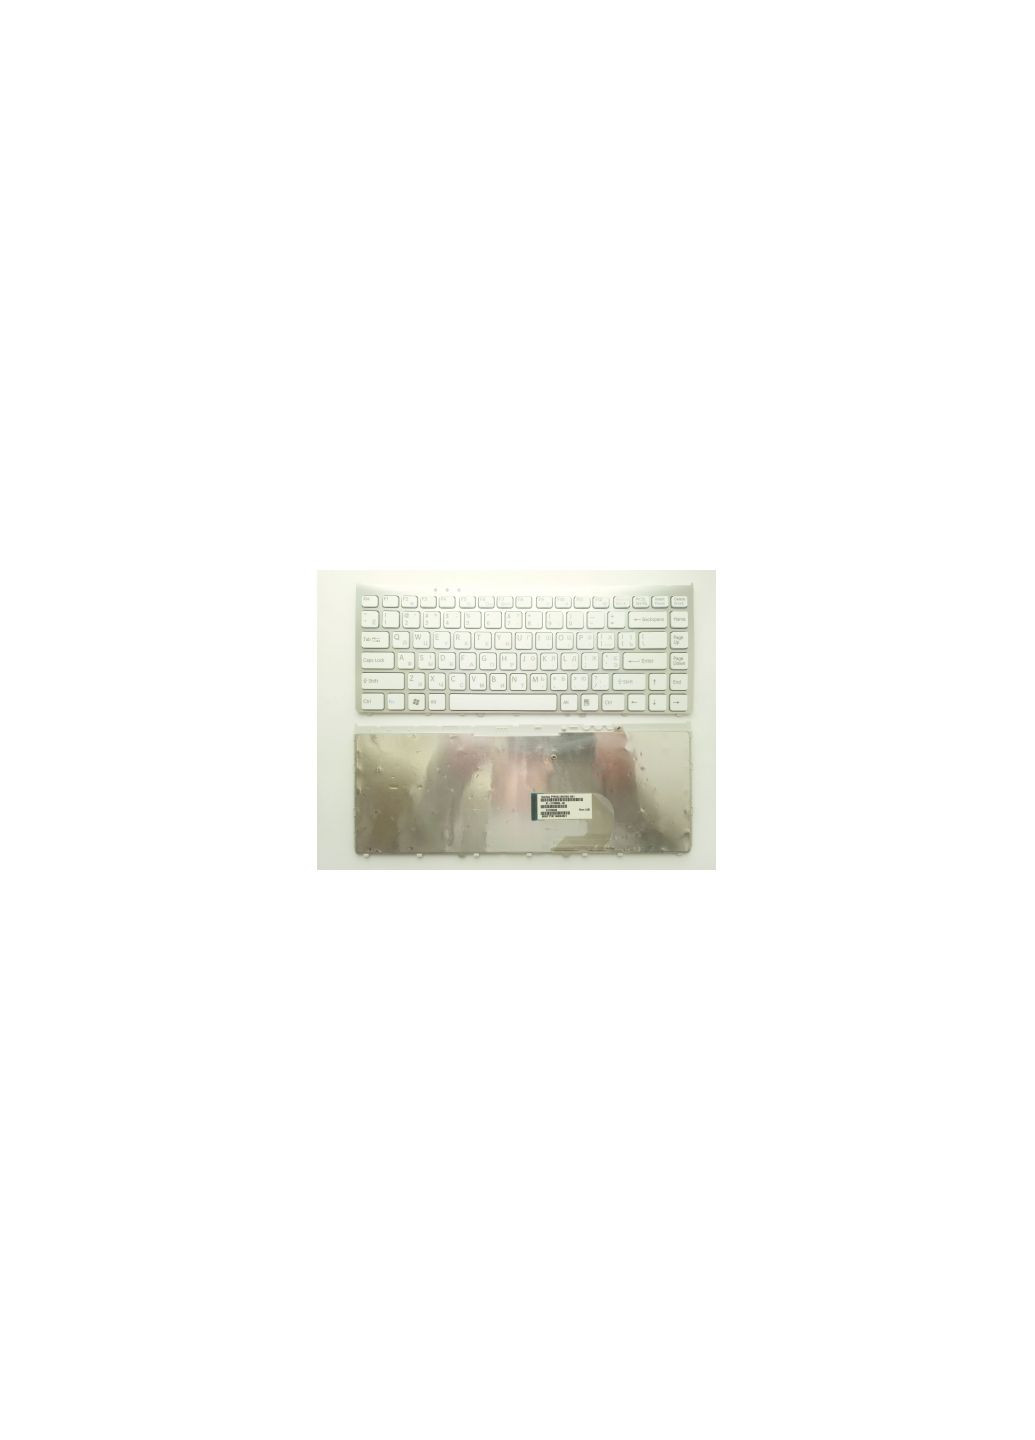 Клавиатура ноутбука VGNFW белая UA (A43345) Sony vgn-fw series белая ua (276707410)